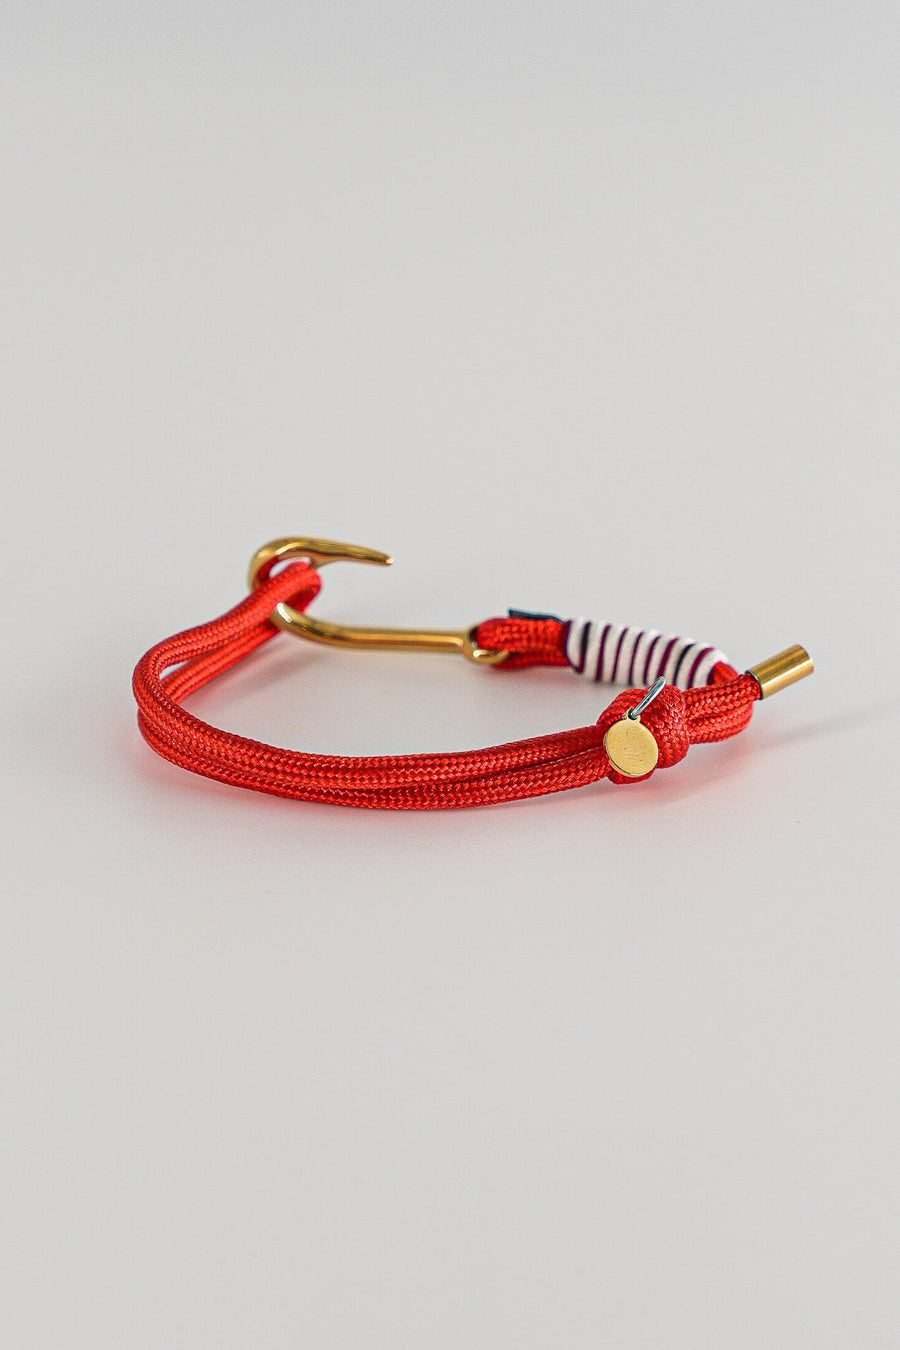 Hook Bracelet